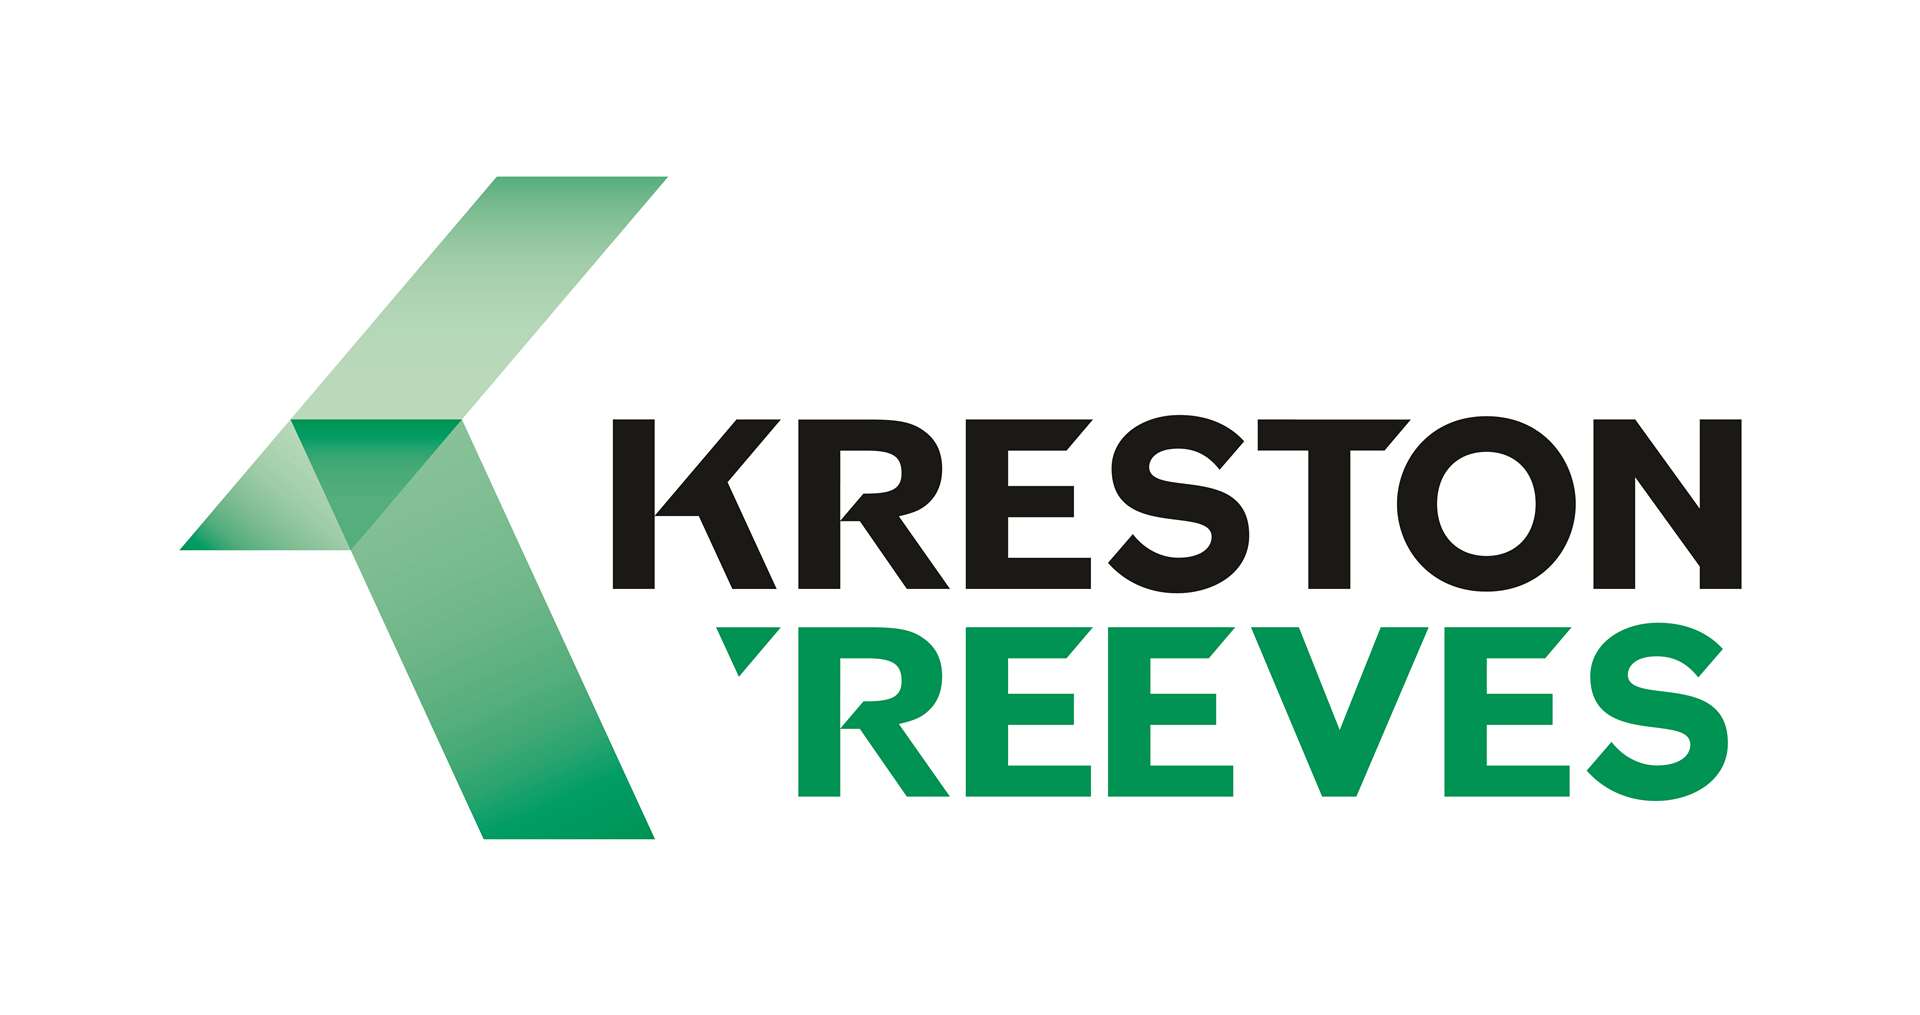 The new Kreston Reeves logo